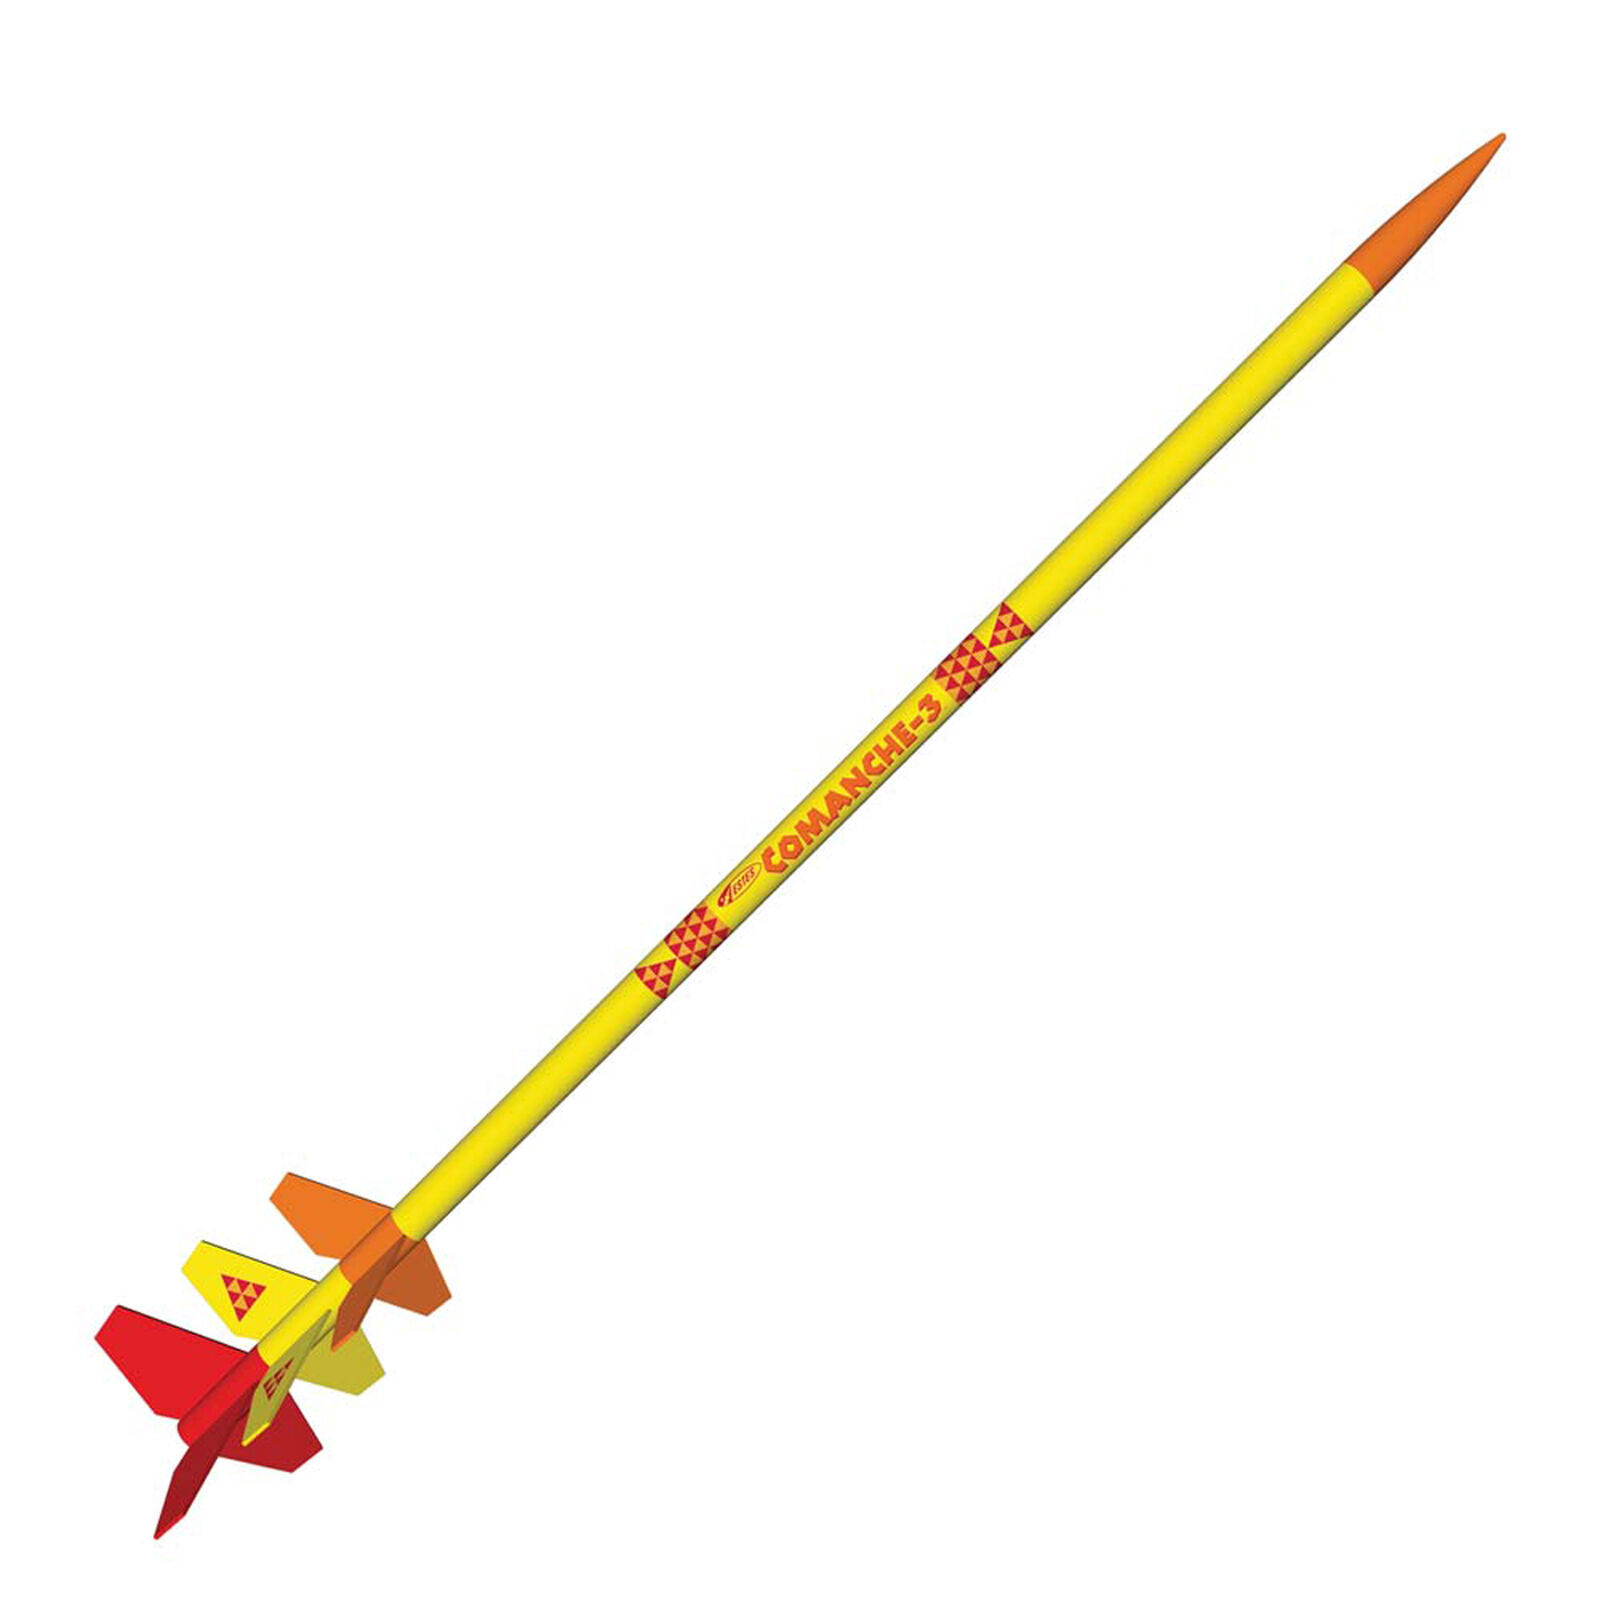 Comanche-3 Rocket Kit Skill Level 3